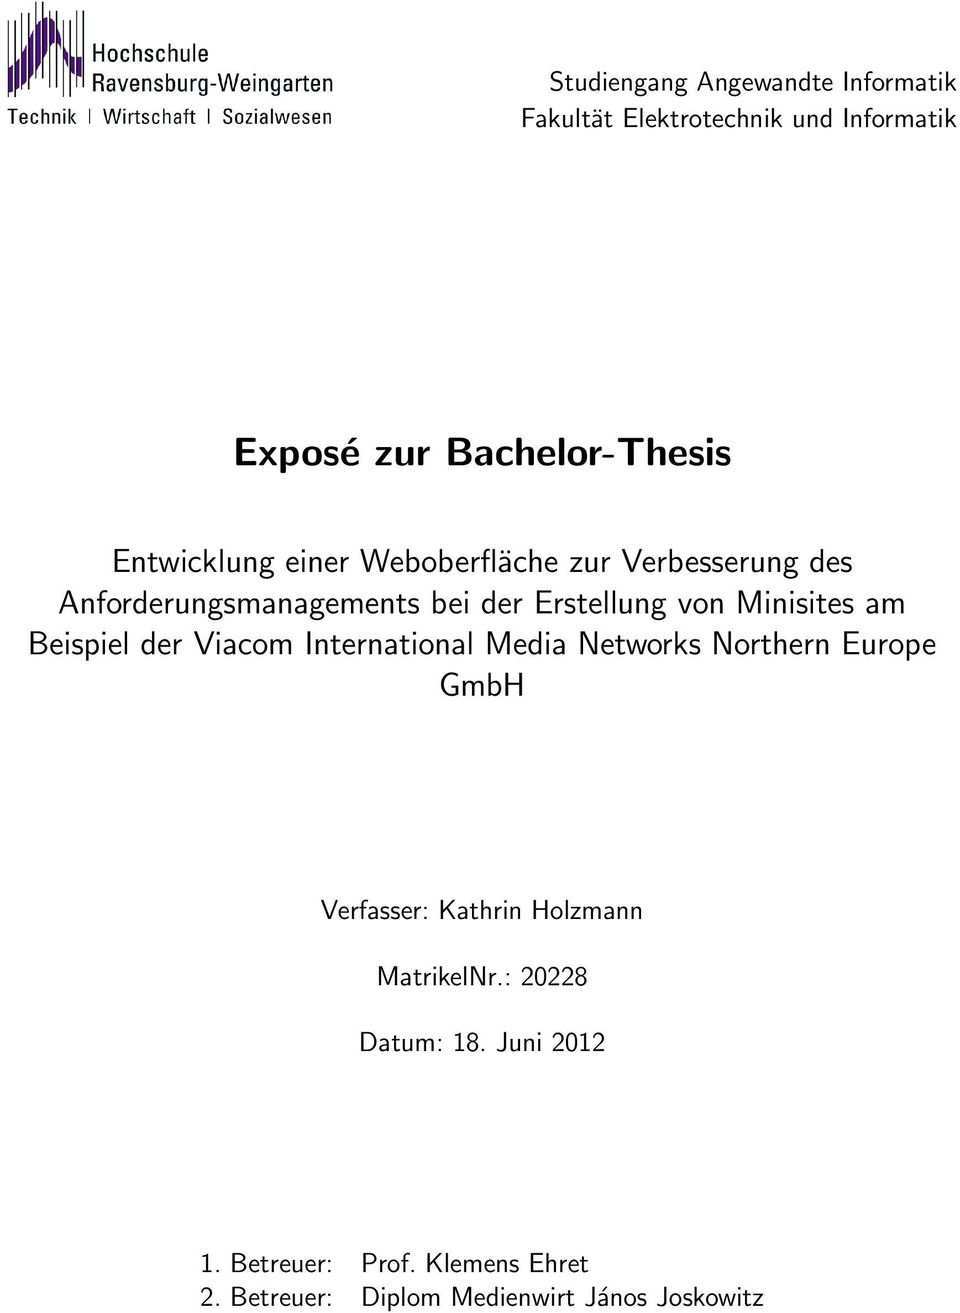 Expose Zur Bachelor Thesis Pdf Kostenfreier Download